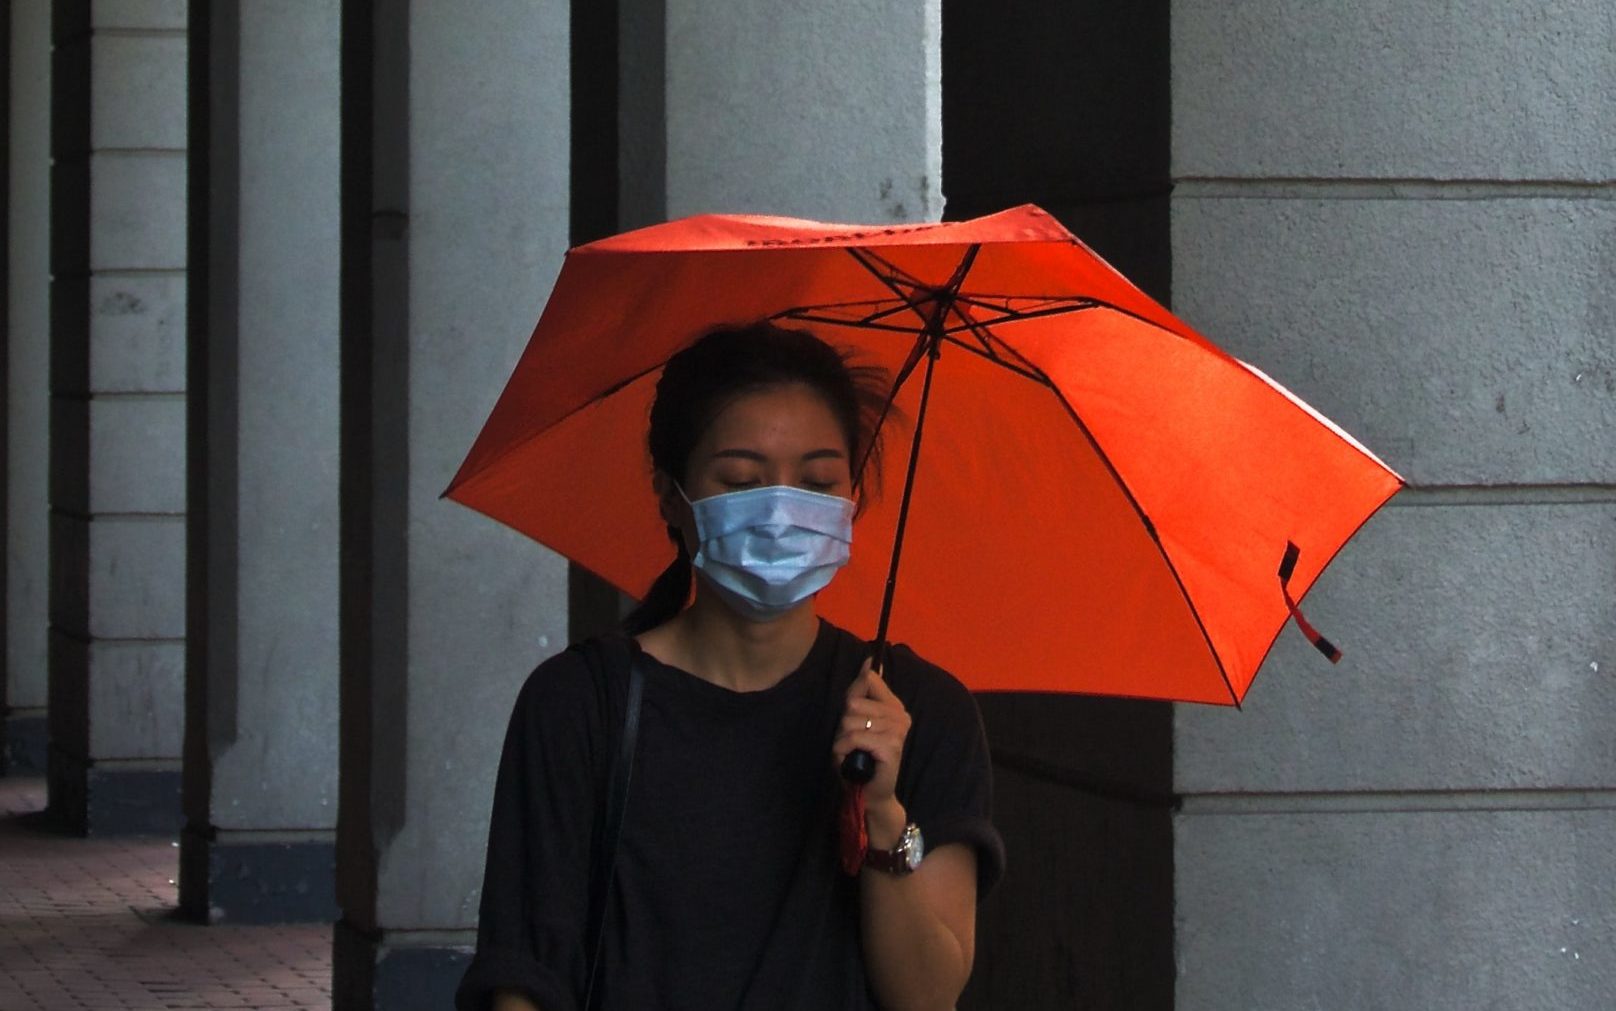 Woman with an umbrella - waterproof face masks